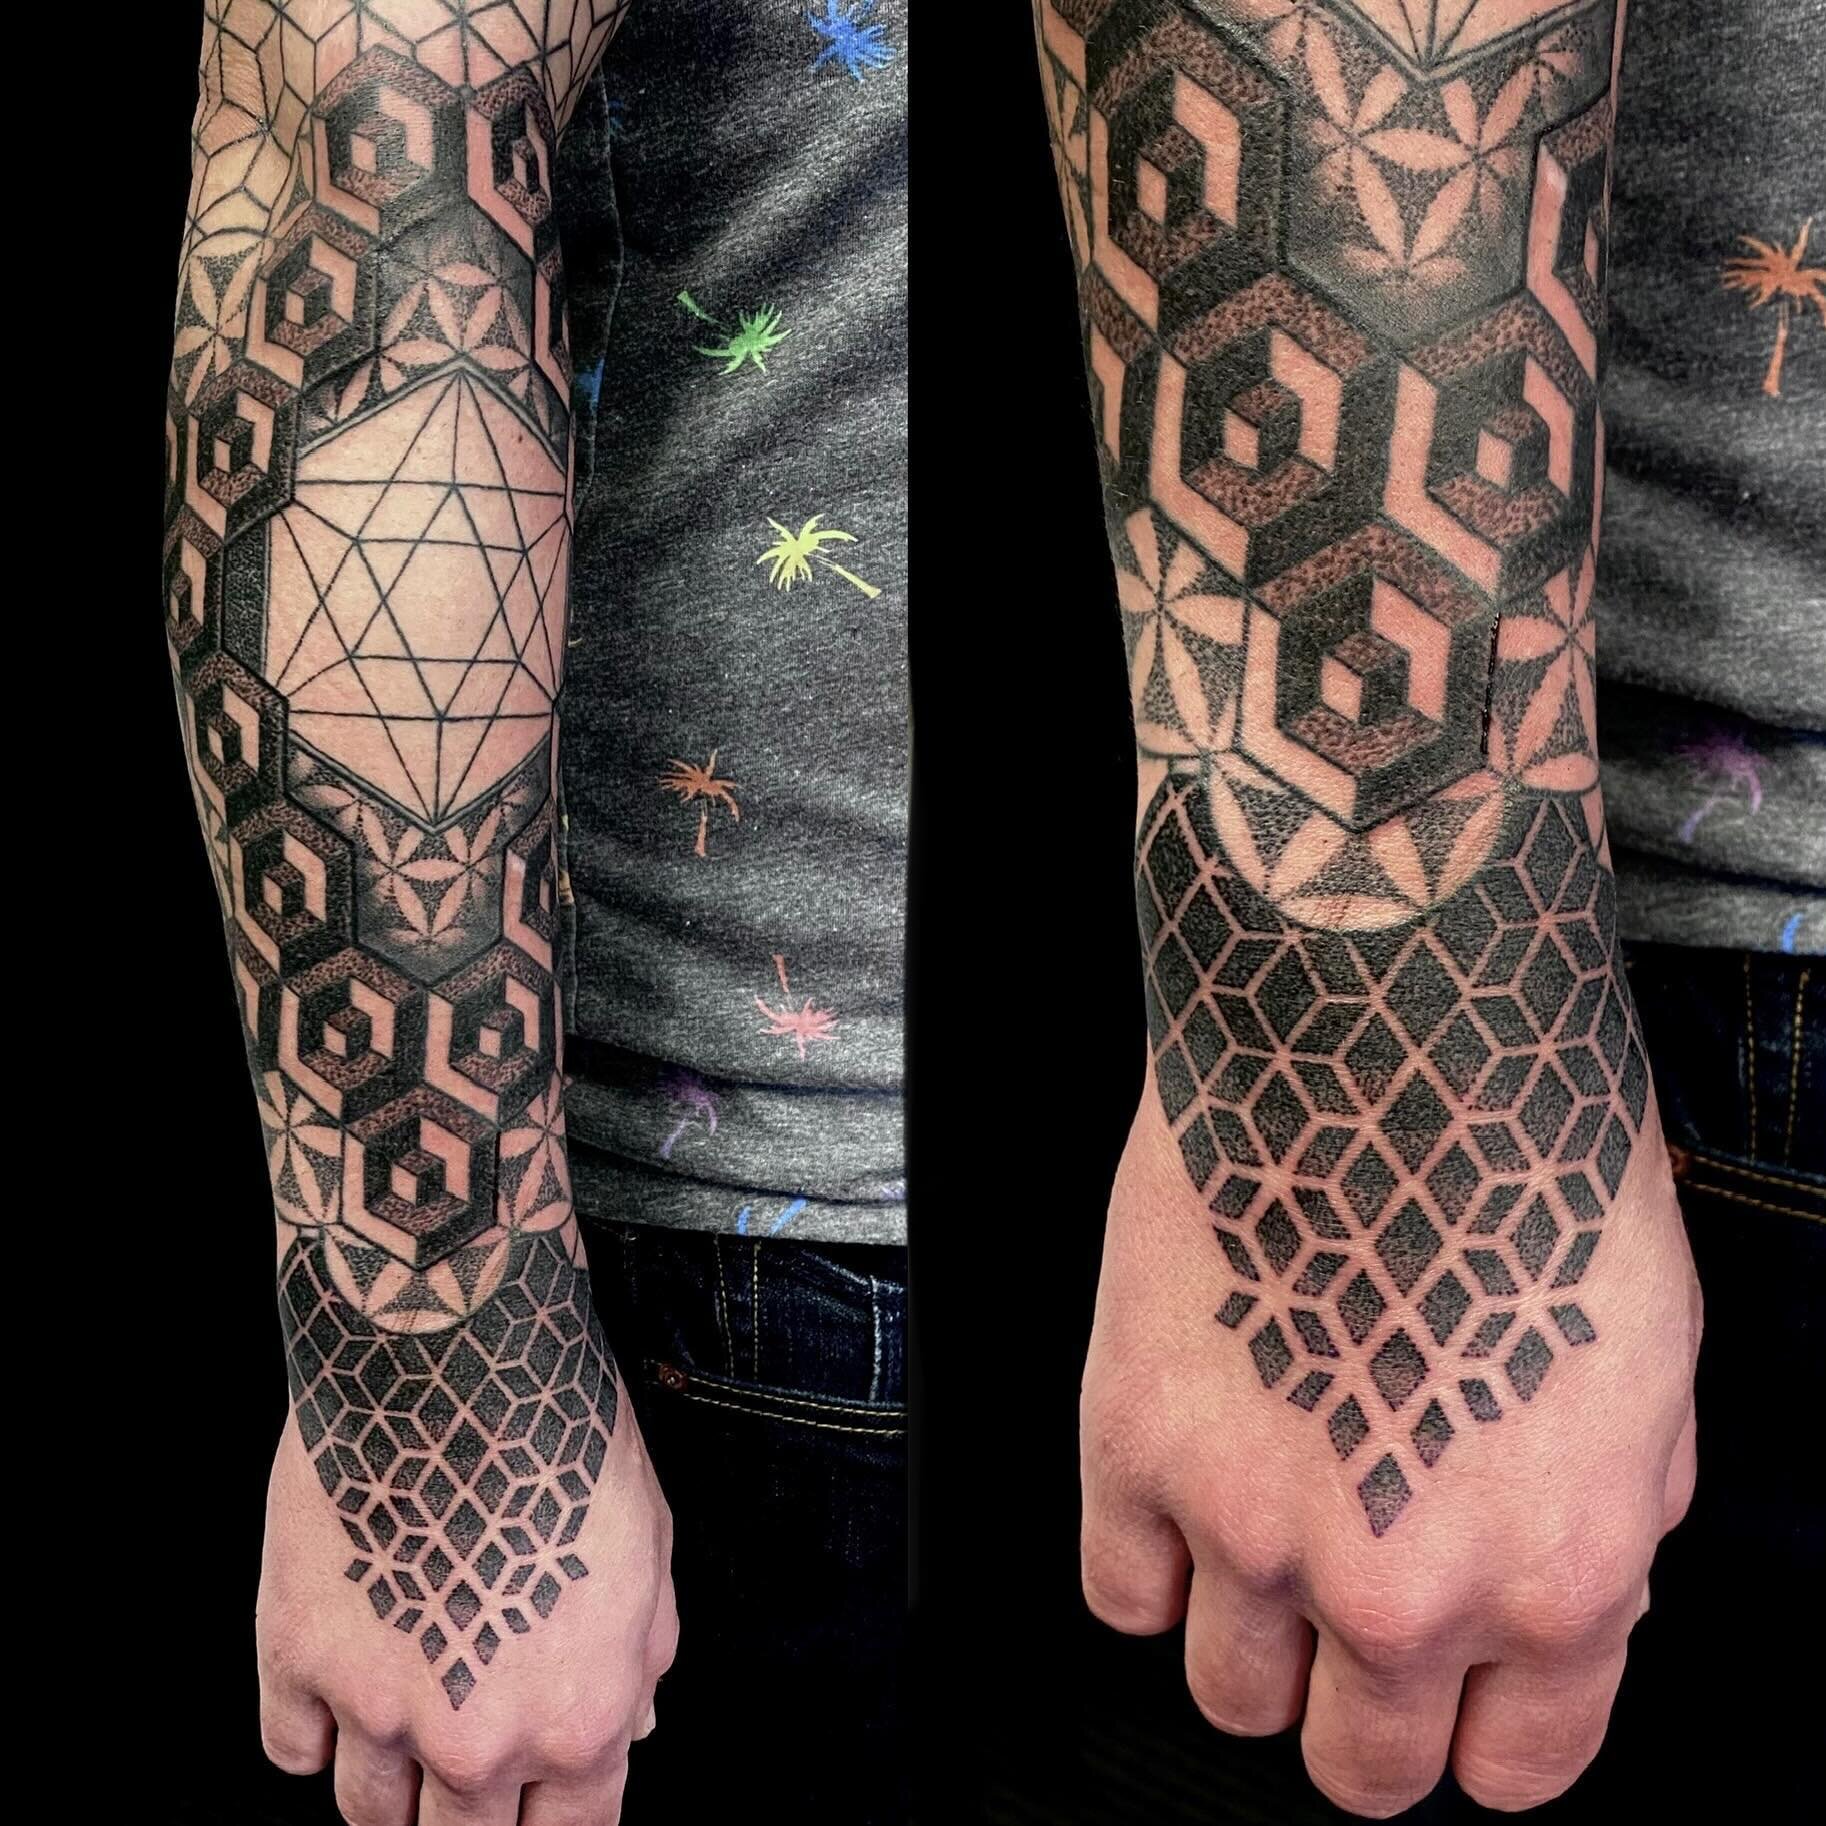 In progress. Excited about this one!
.
.
.
.
.
.
.
.

#tattoo #tattoos #tattooed #tattooartist #cohenfloch  #victoriatattoo #yyjtattoo #vanisletattoo  #vancouvertattoo #tattoodo  #inked #刺青 #tattooworkers #tattoolife